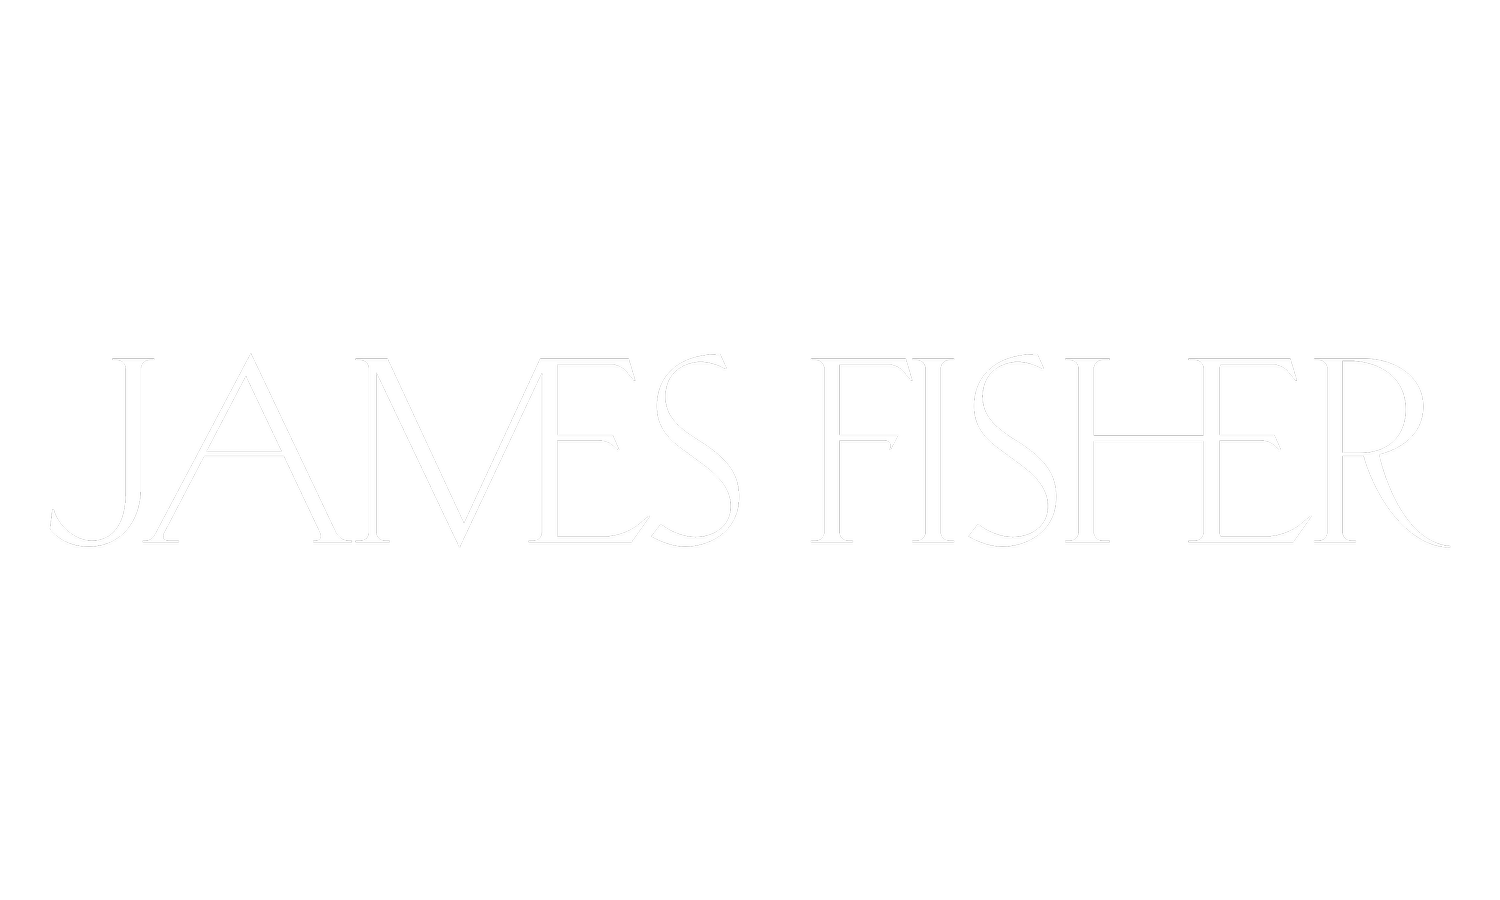 JAMES FISHER | Transformative Brand Leader